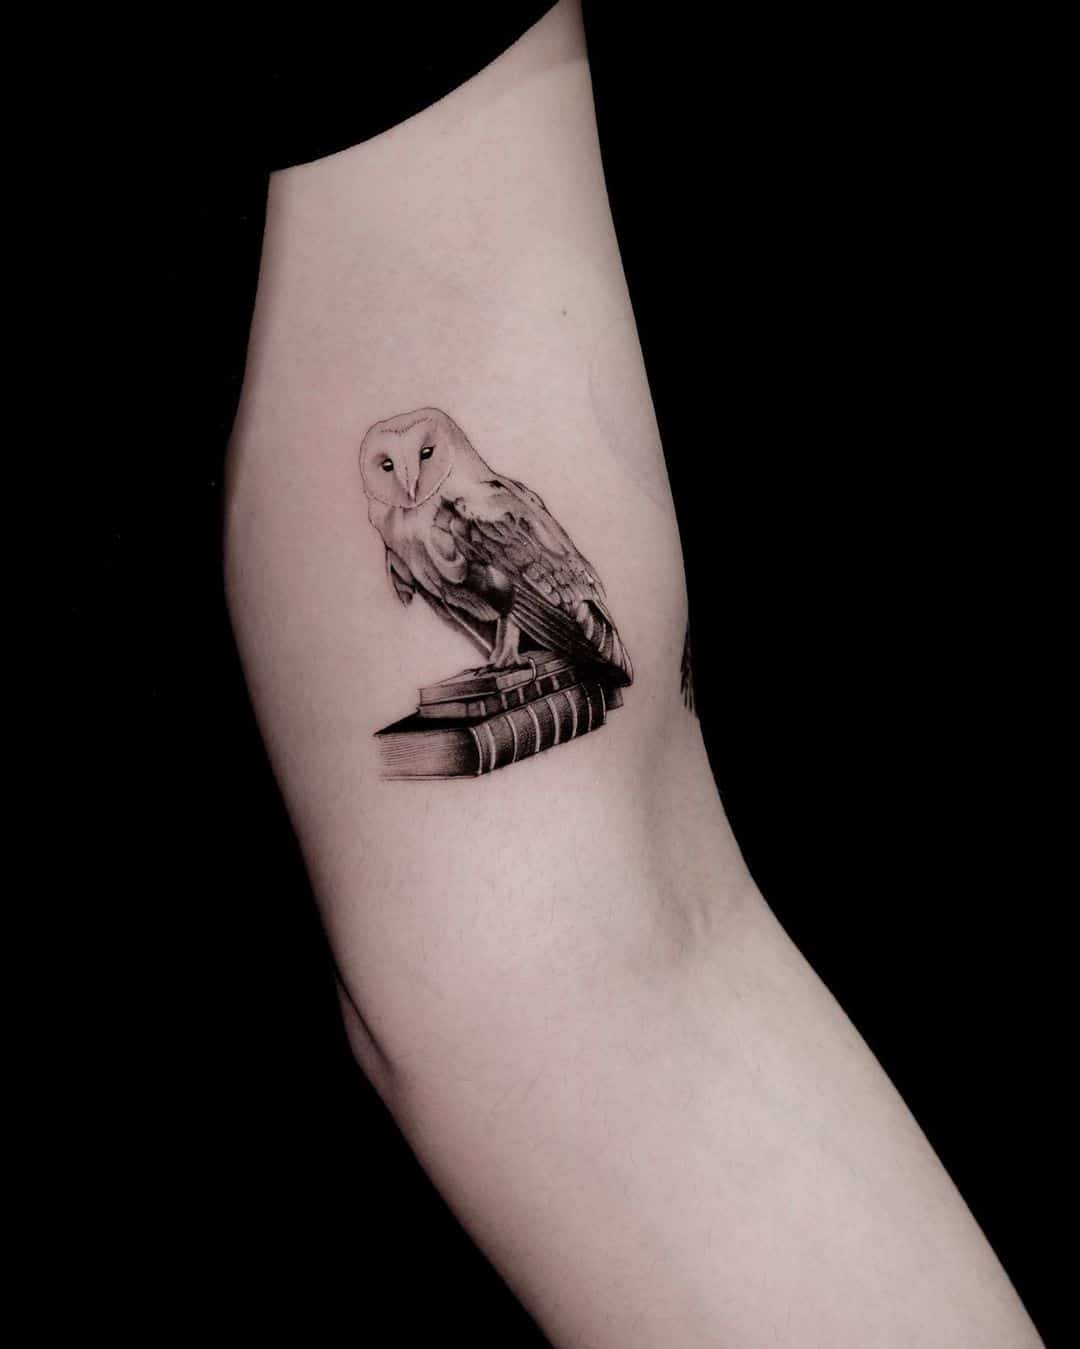 Owl tattoo for women by zionele